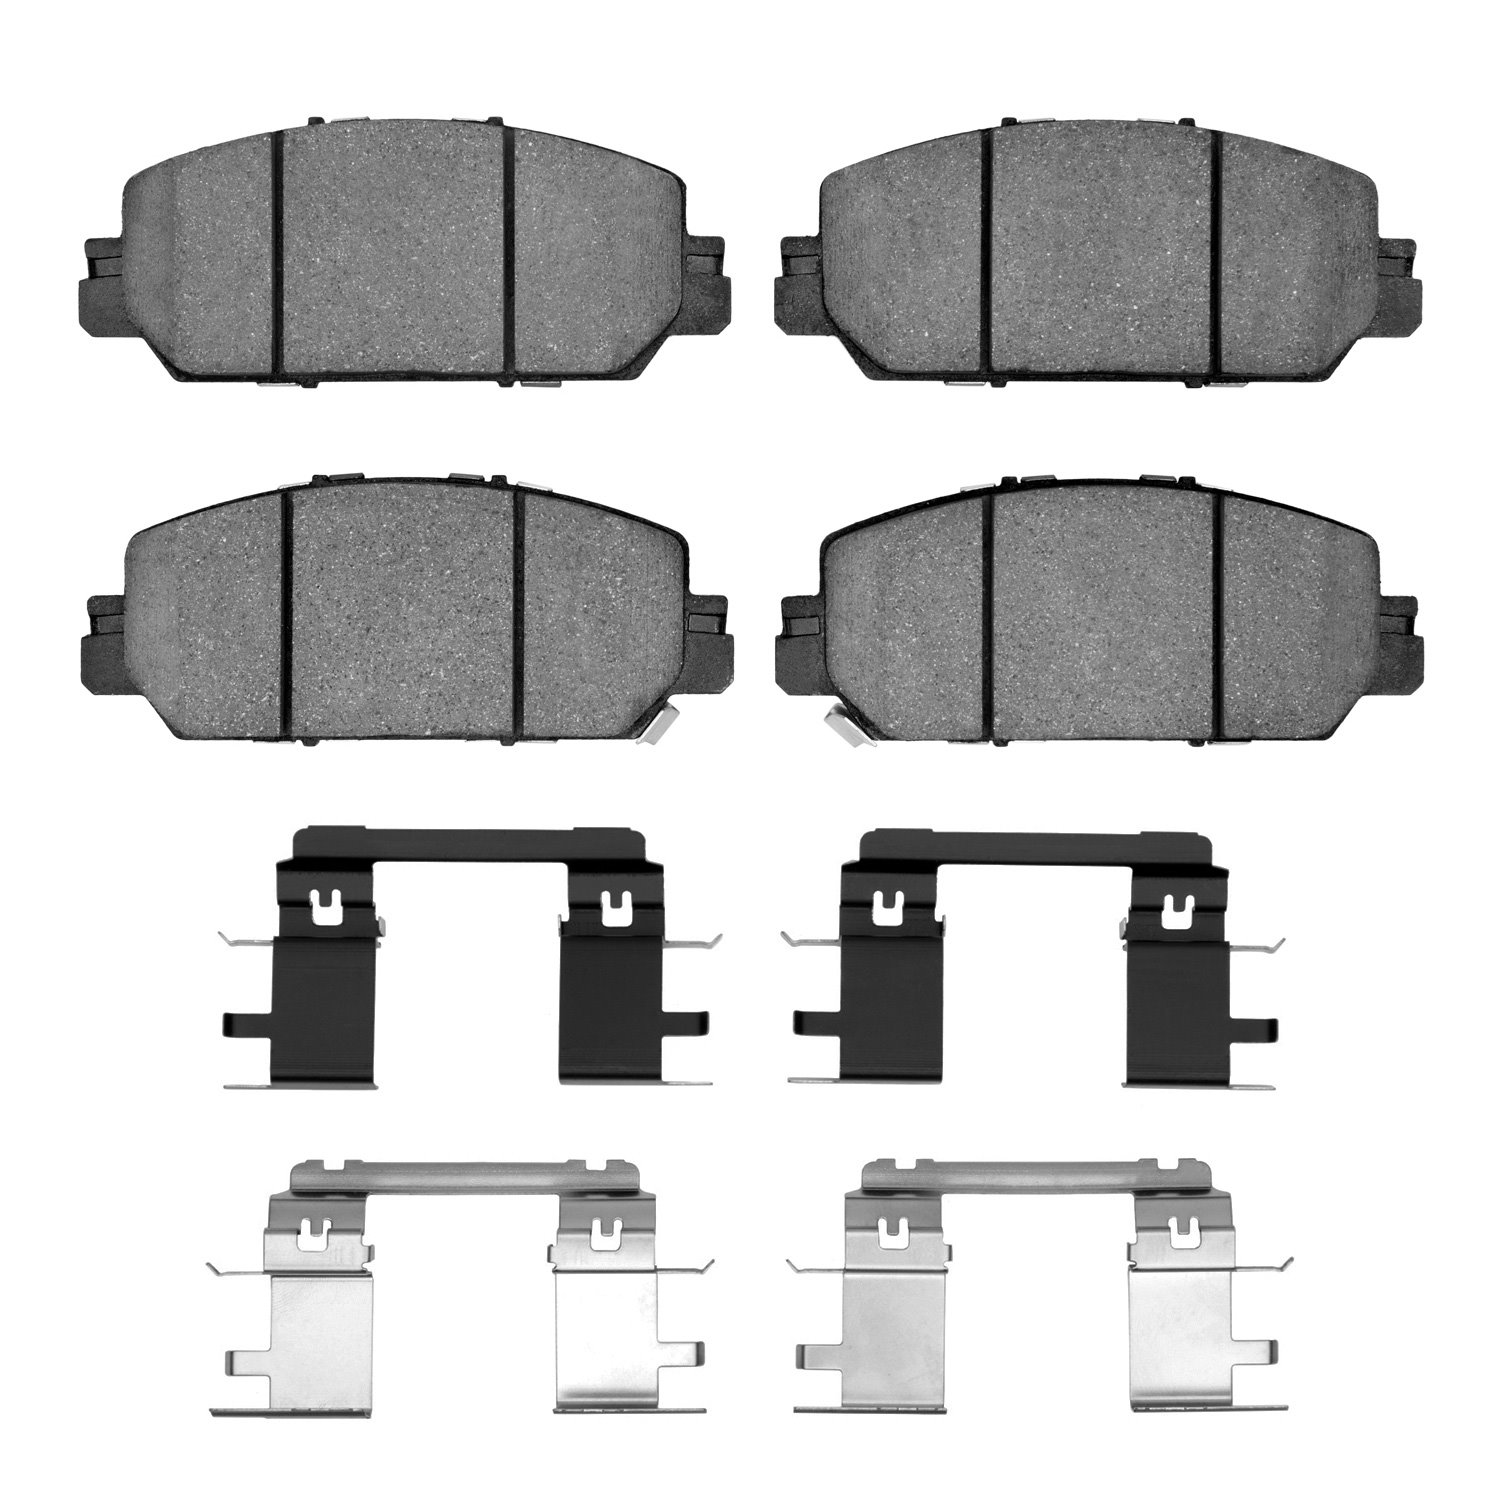 1552-2036-01 5000 Advanced Ceramic Brake Pads & Hardware Kit, Fits Select Acura/Honda, Position: Front